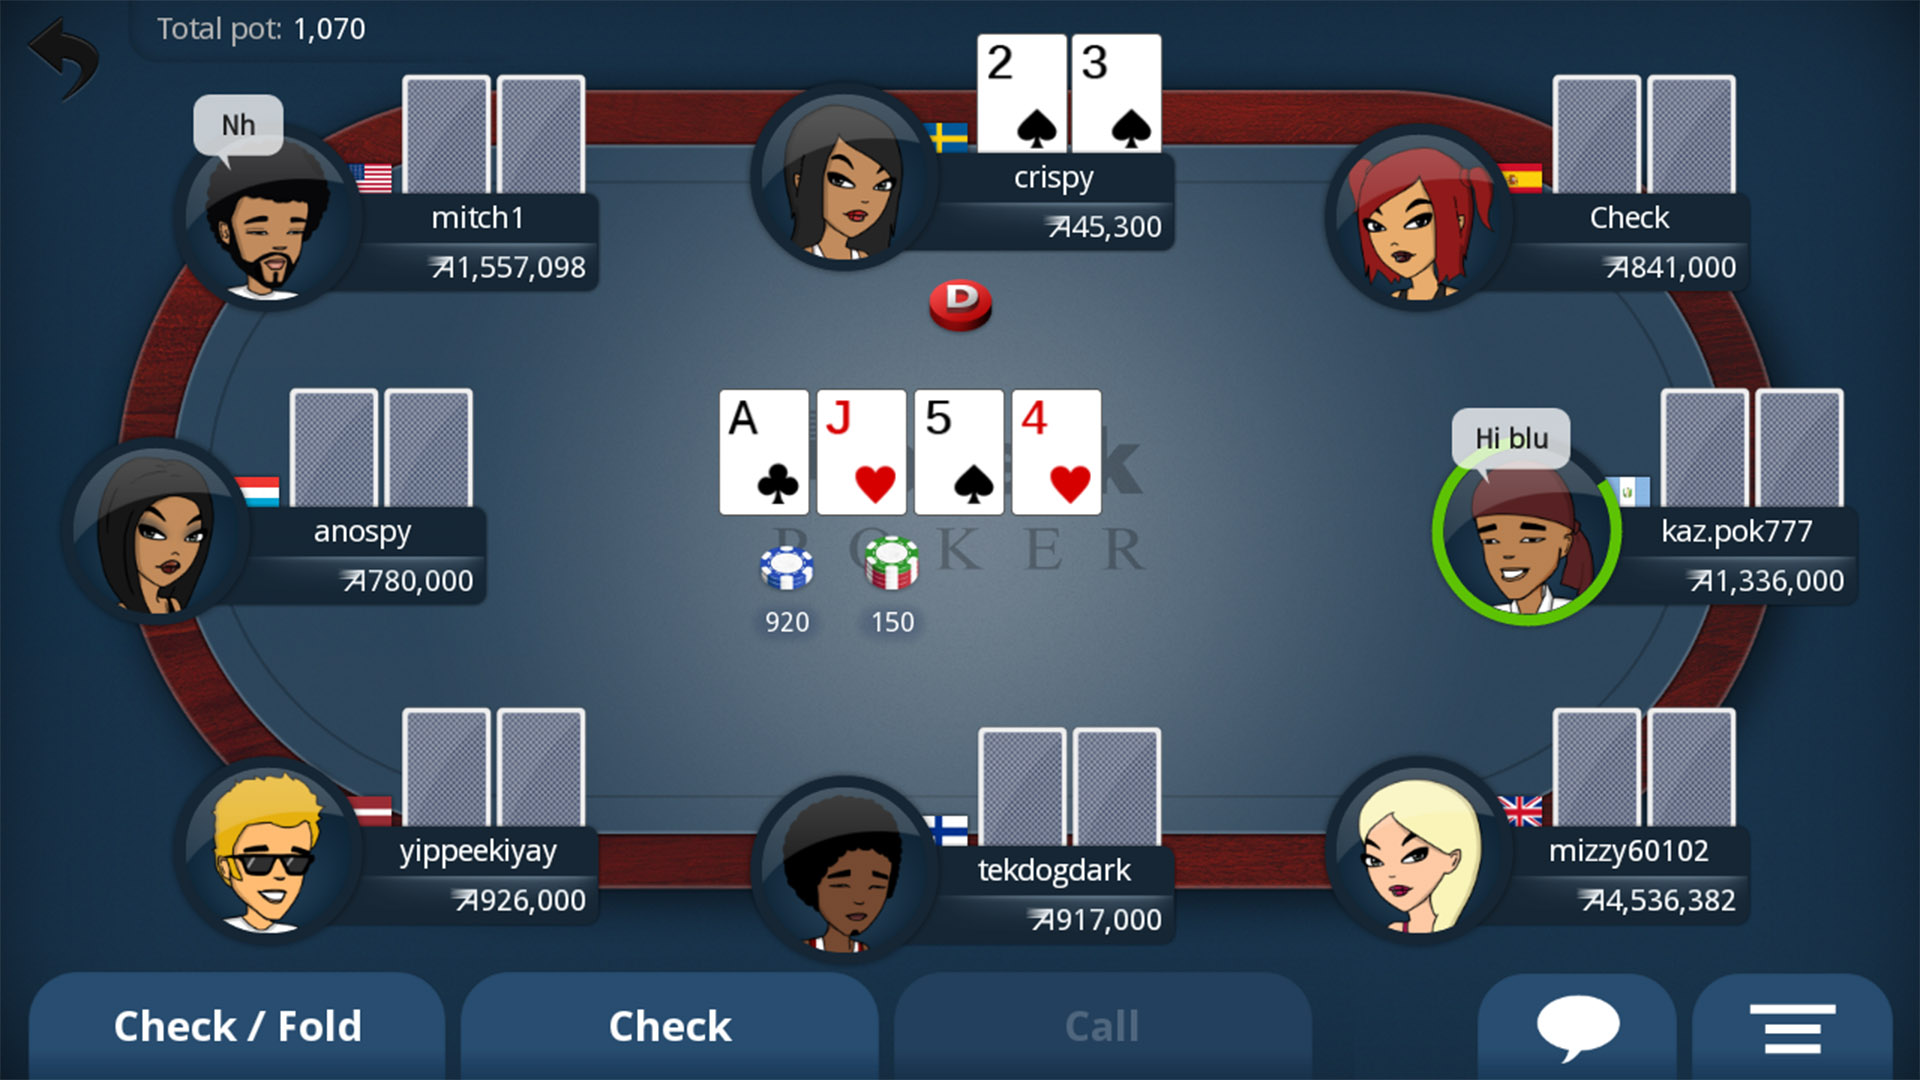 Appeak screenshot 2020 best poker apps and games